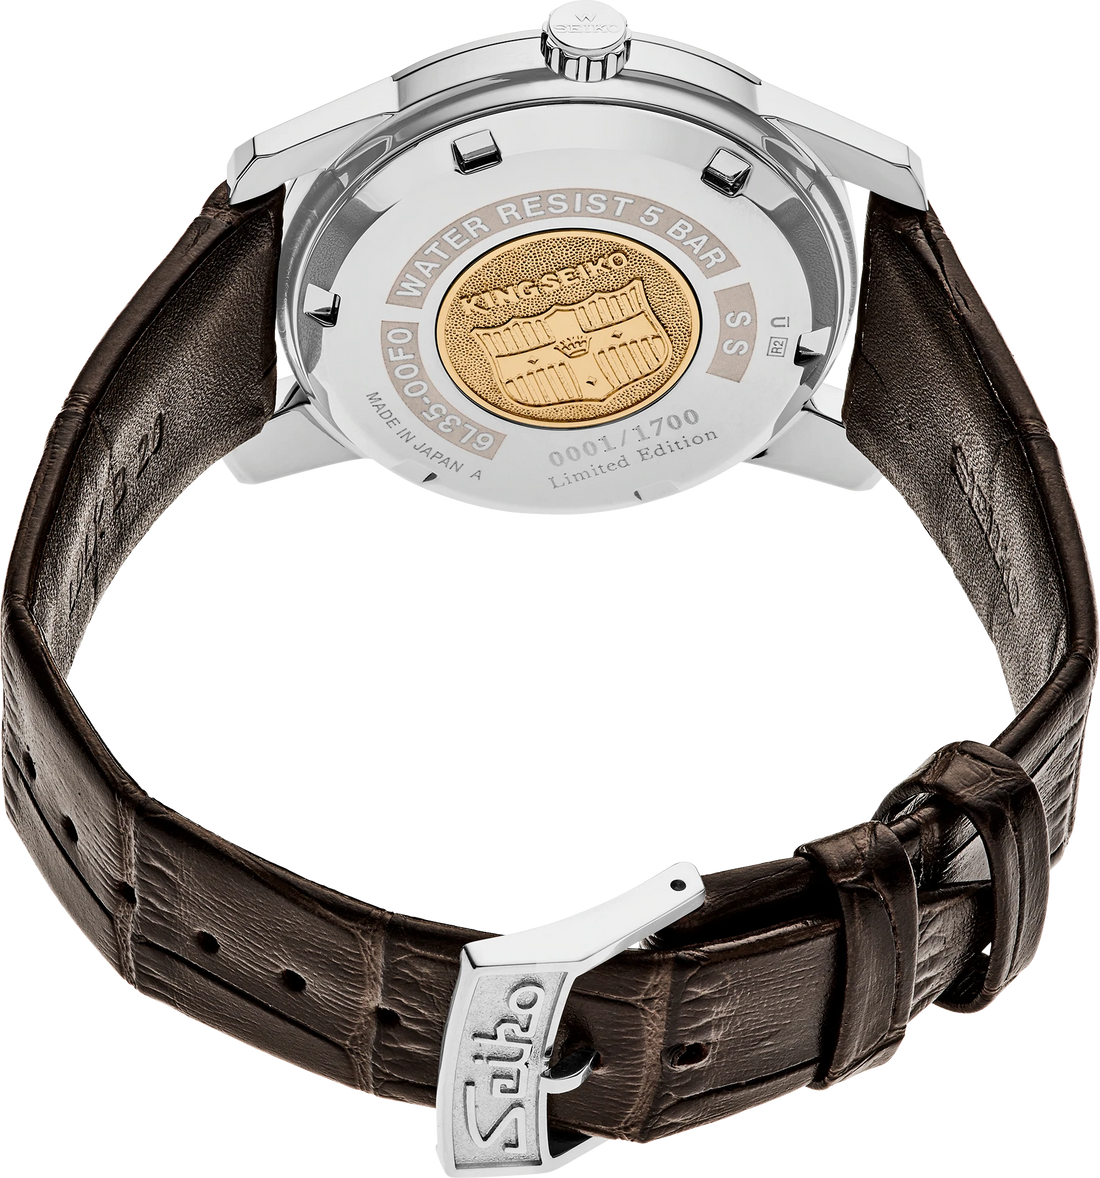 Seiko SJE087 Limited Edition King Seiko Watch | Skeie's Jewelers